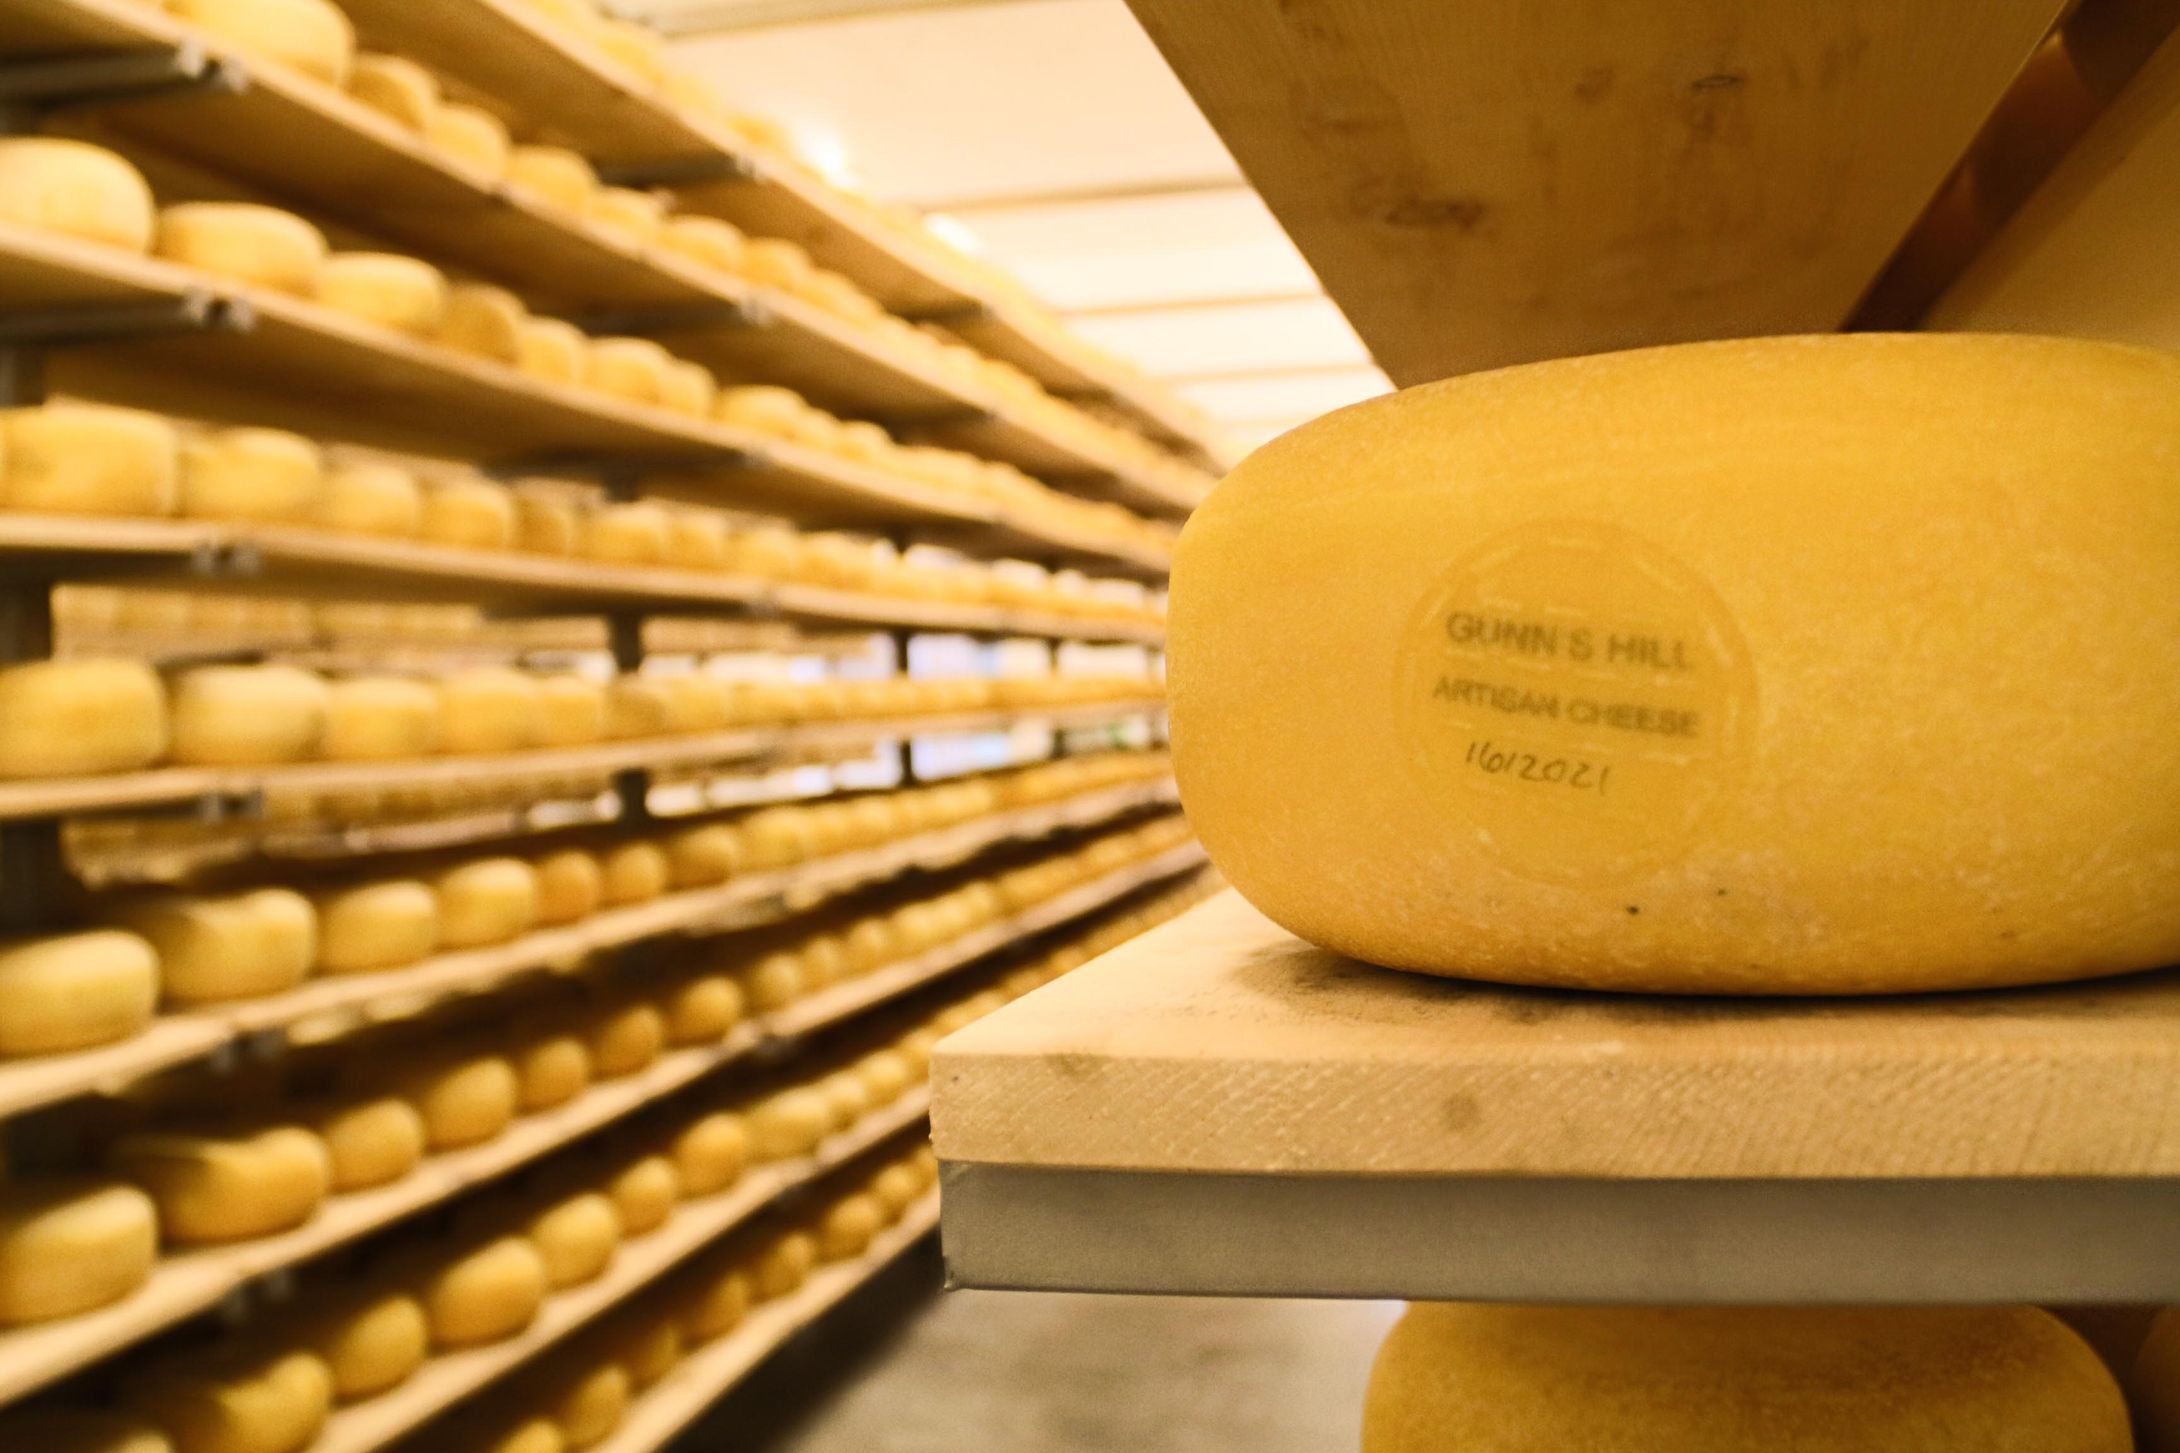 Oxford Cheese Ontario